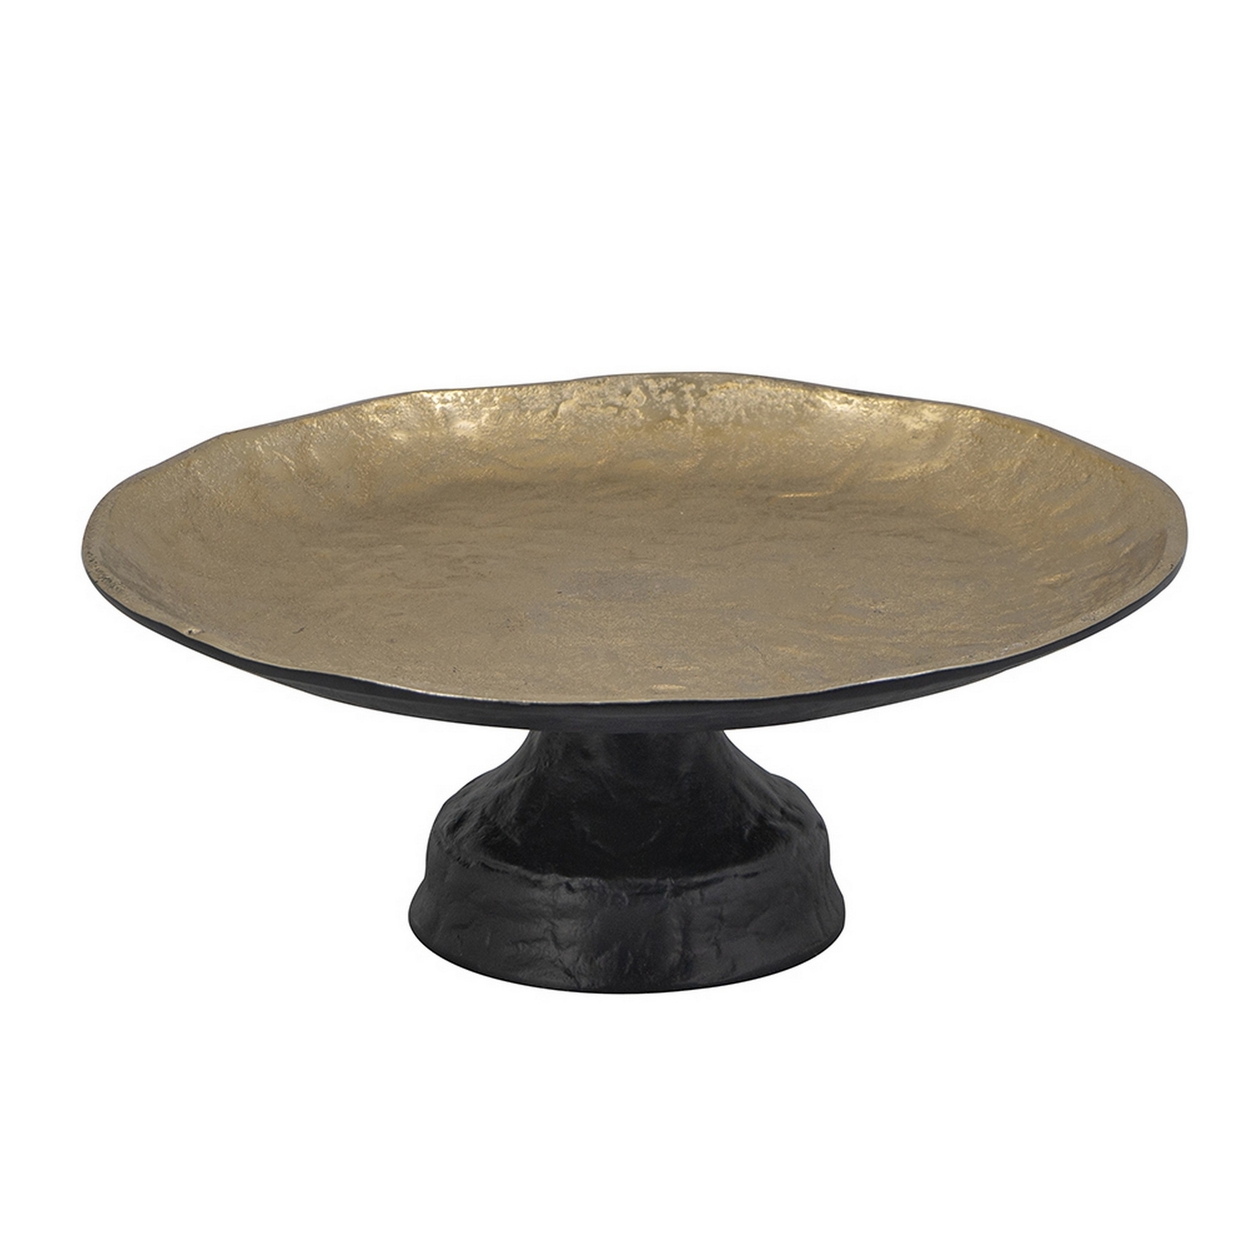 14 Inch Round Decorative Tray, Black And Gold Aluminum, Textured Surface- Saltoro Sherpi